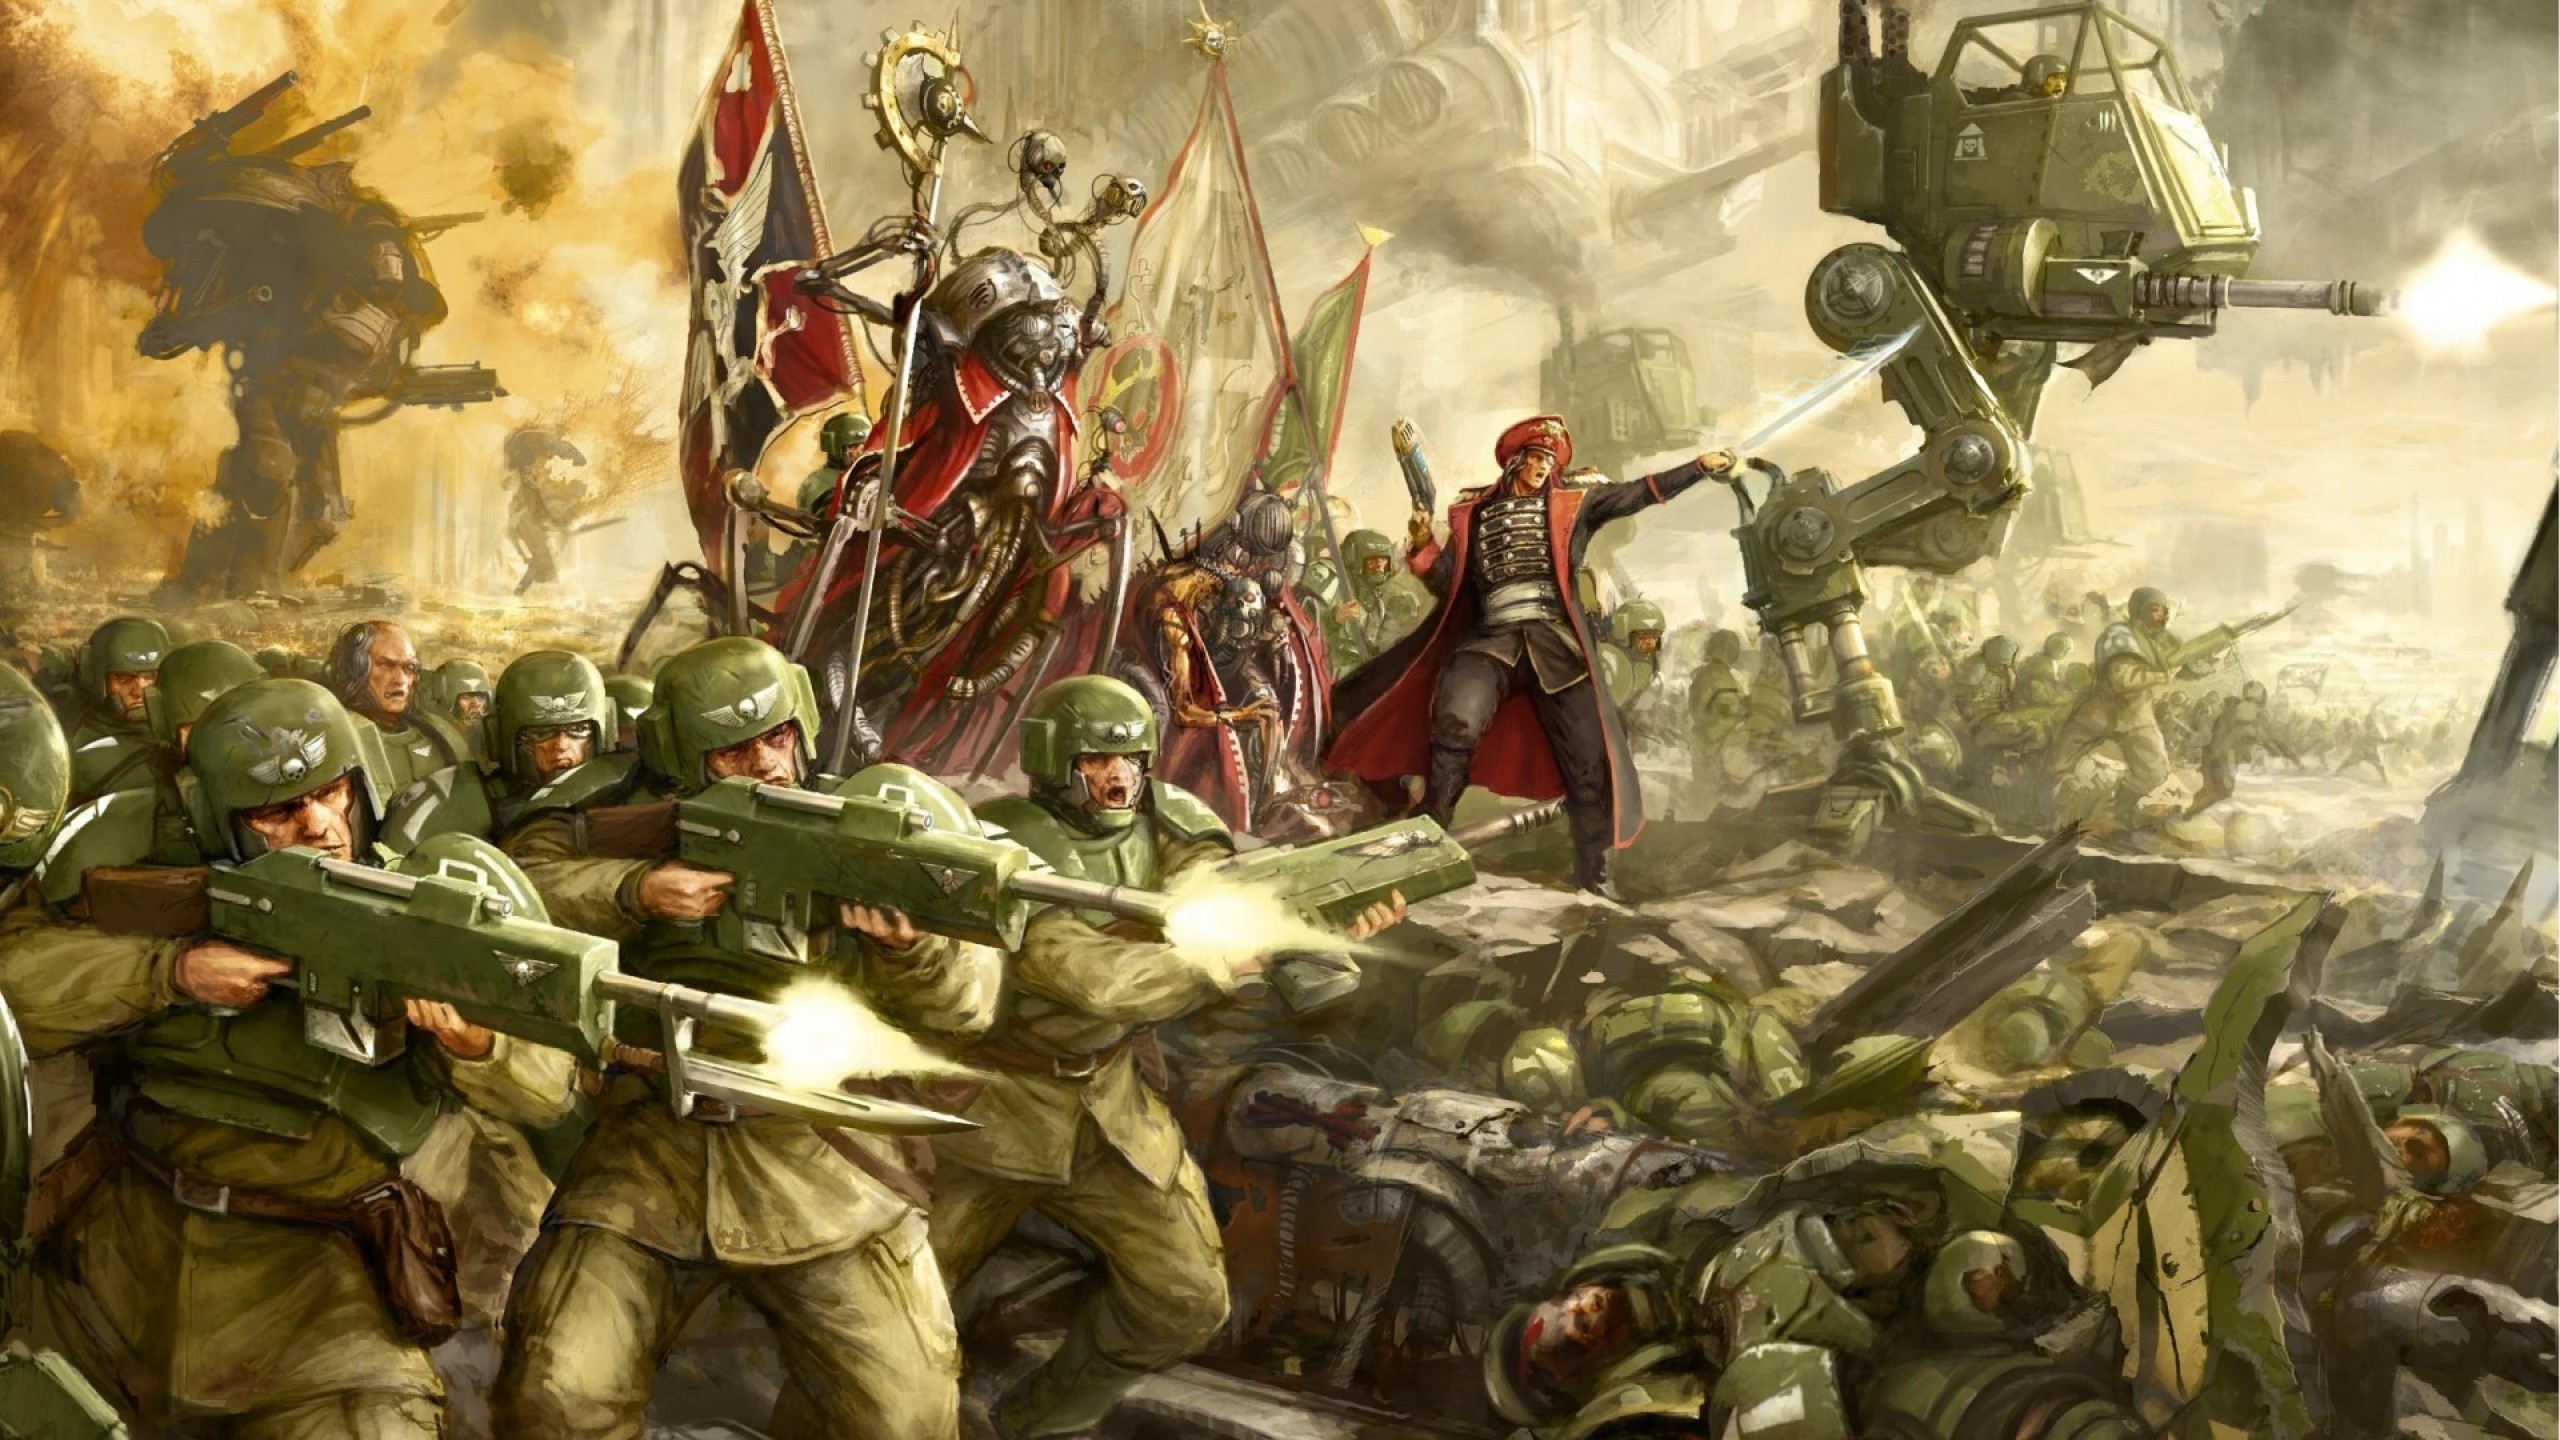 Warhammer 40K Wallpapers Hd : Warhammer 40k space marines hd, video ...